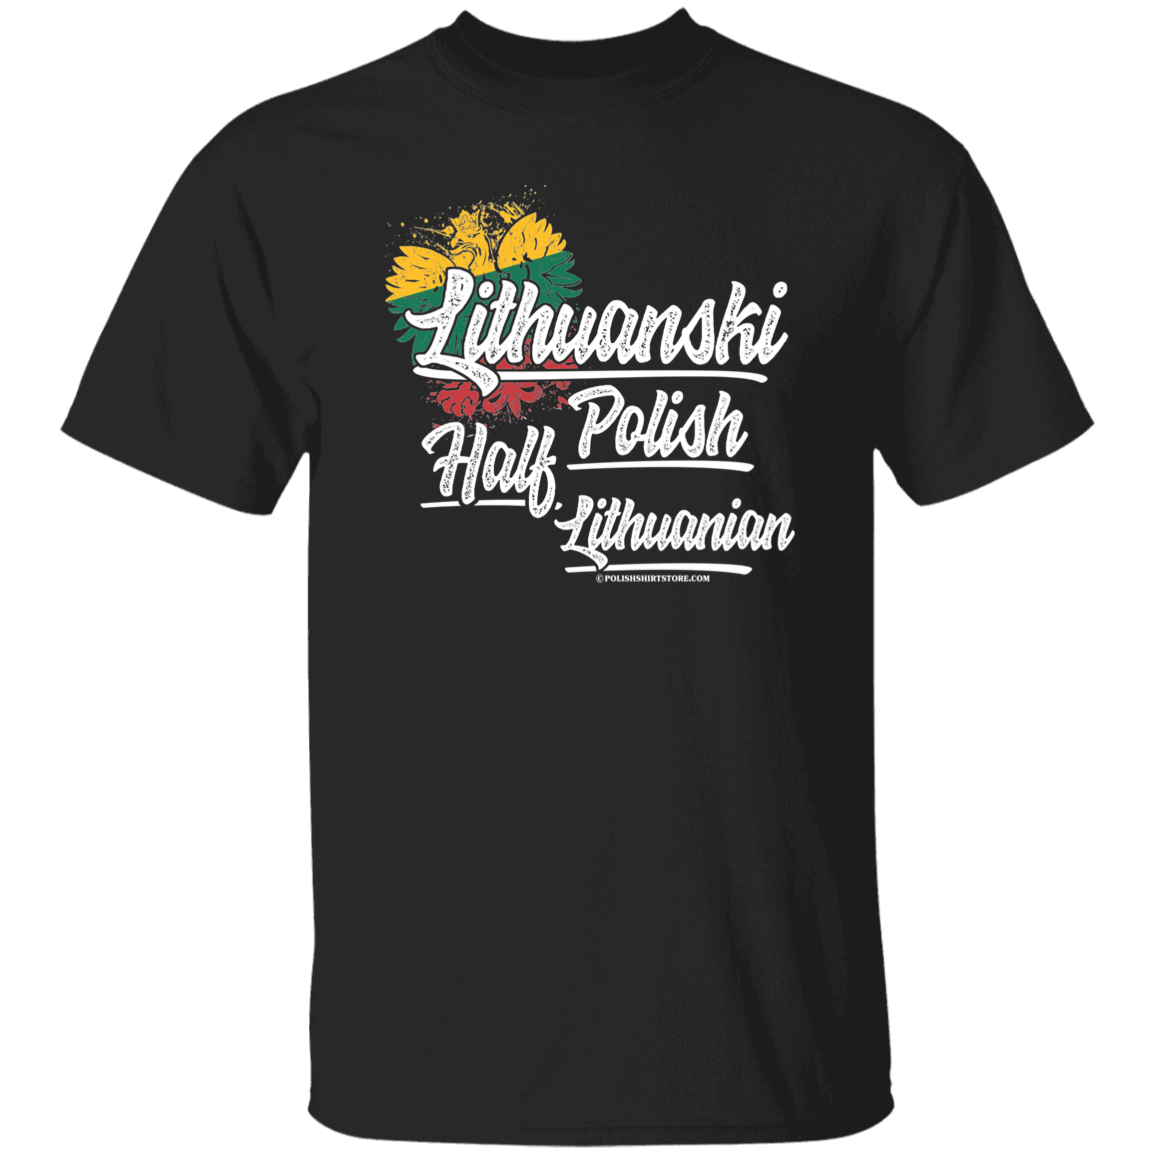 Lithuanski Half Lithuania Half Polish Apparel CustomCat G500 5.3 oz. T-Shirt Black S